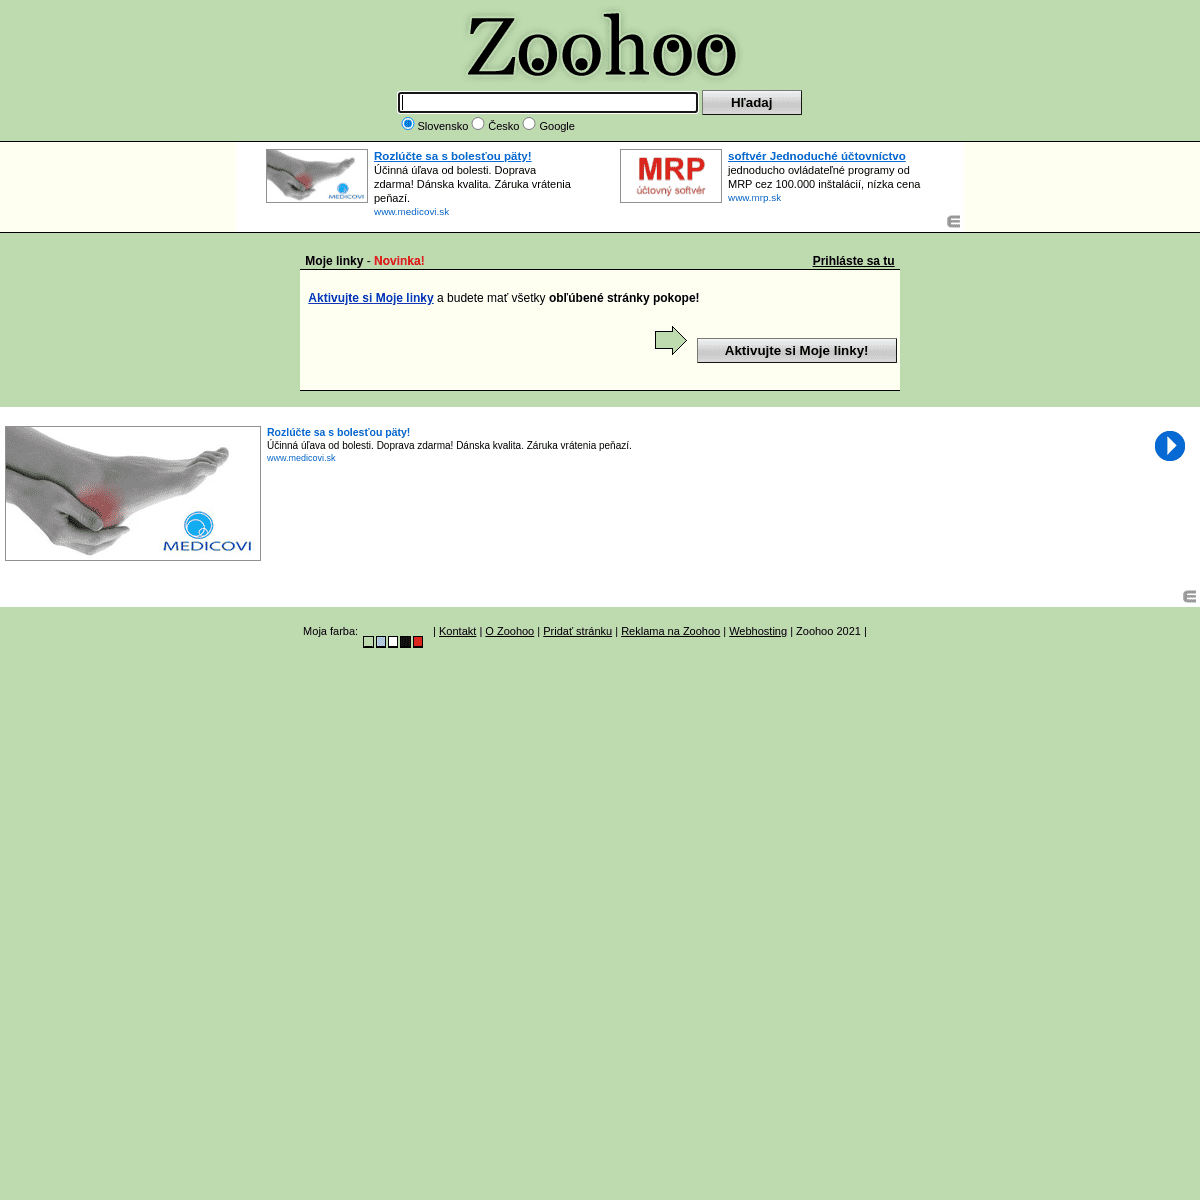 A complete backup of https://zoohoo.sk